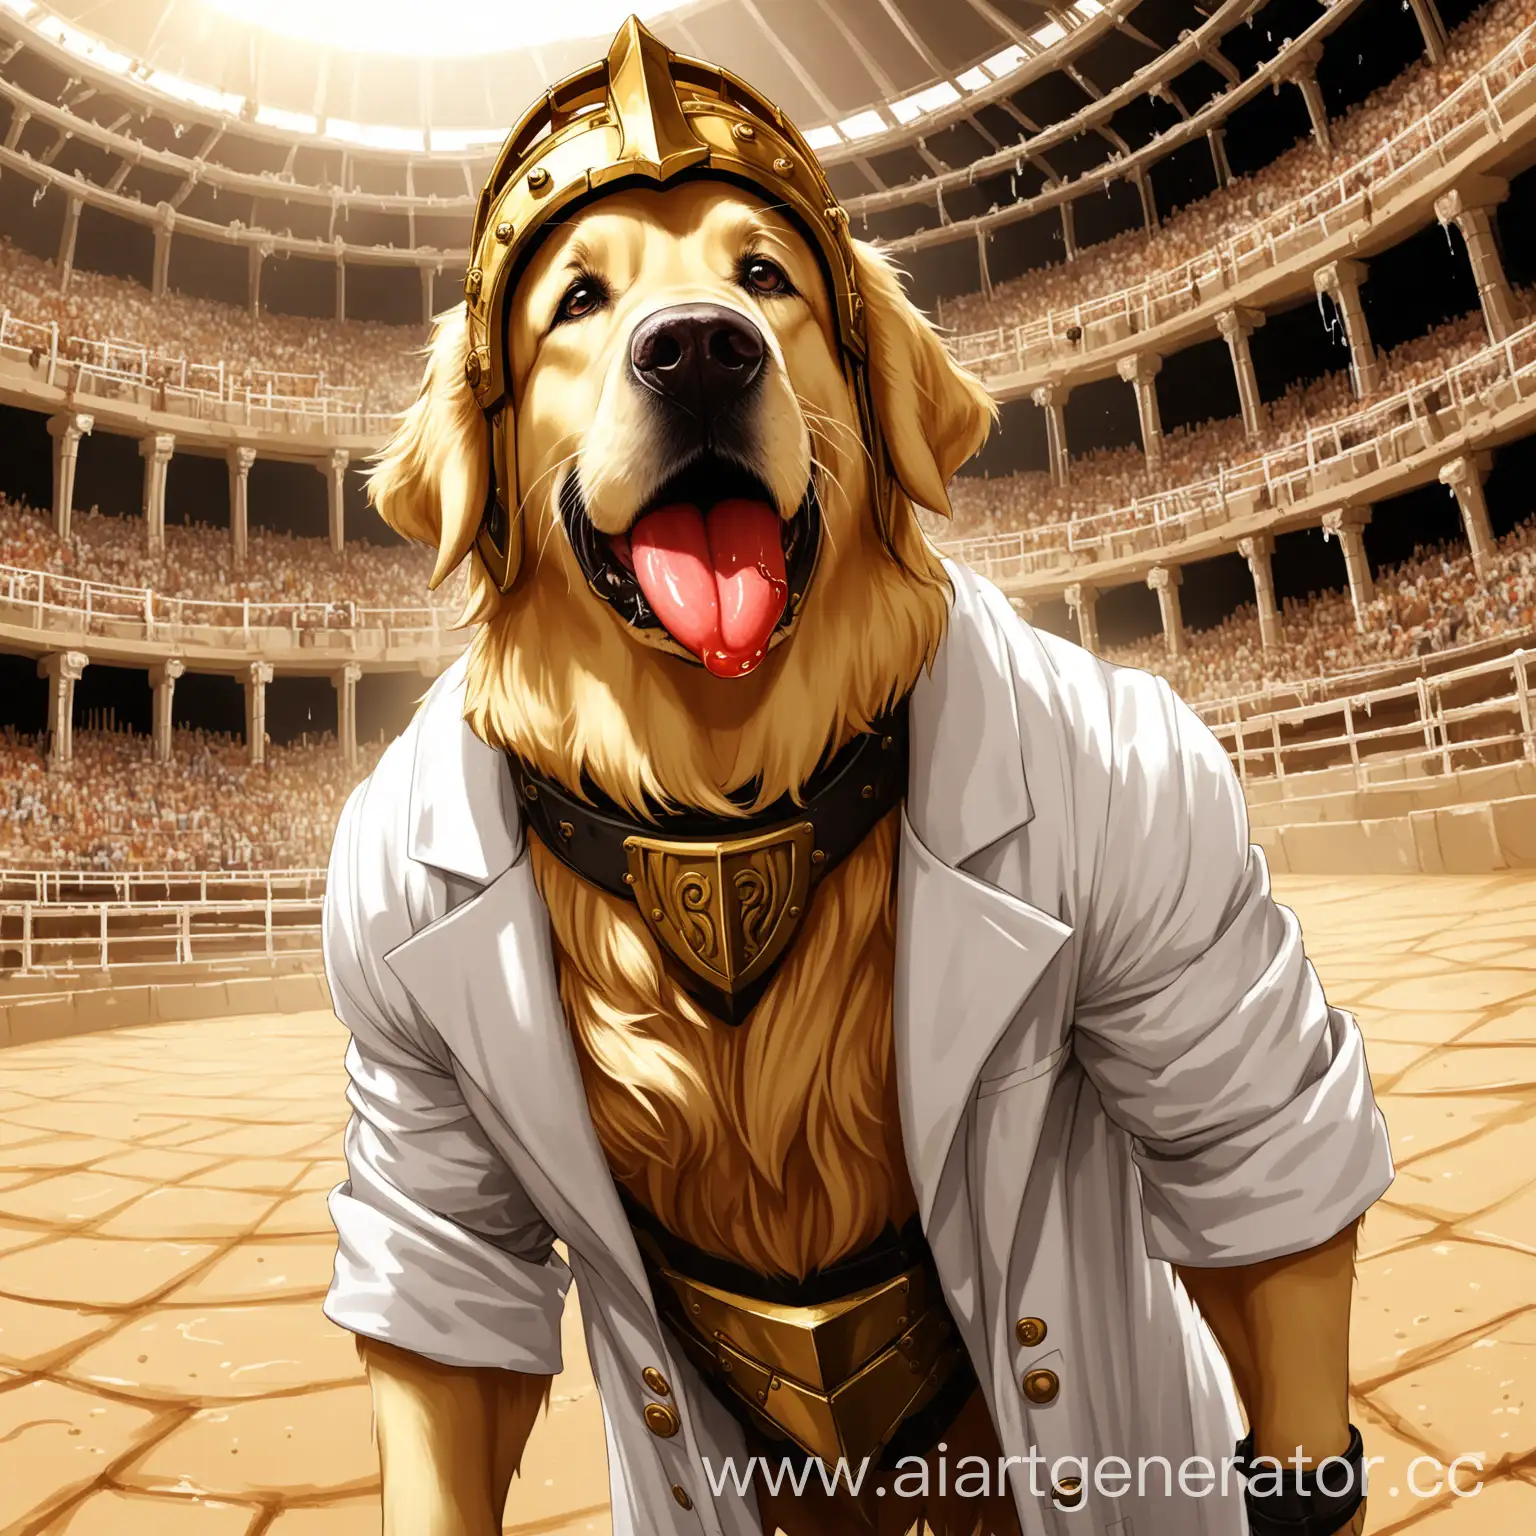 Golden-Retriever-Gladiator-Adorable-Dog-Scientist-in-Arena